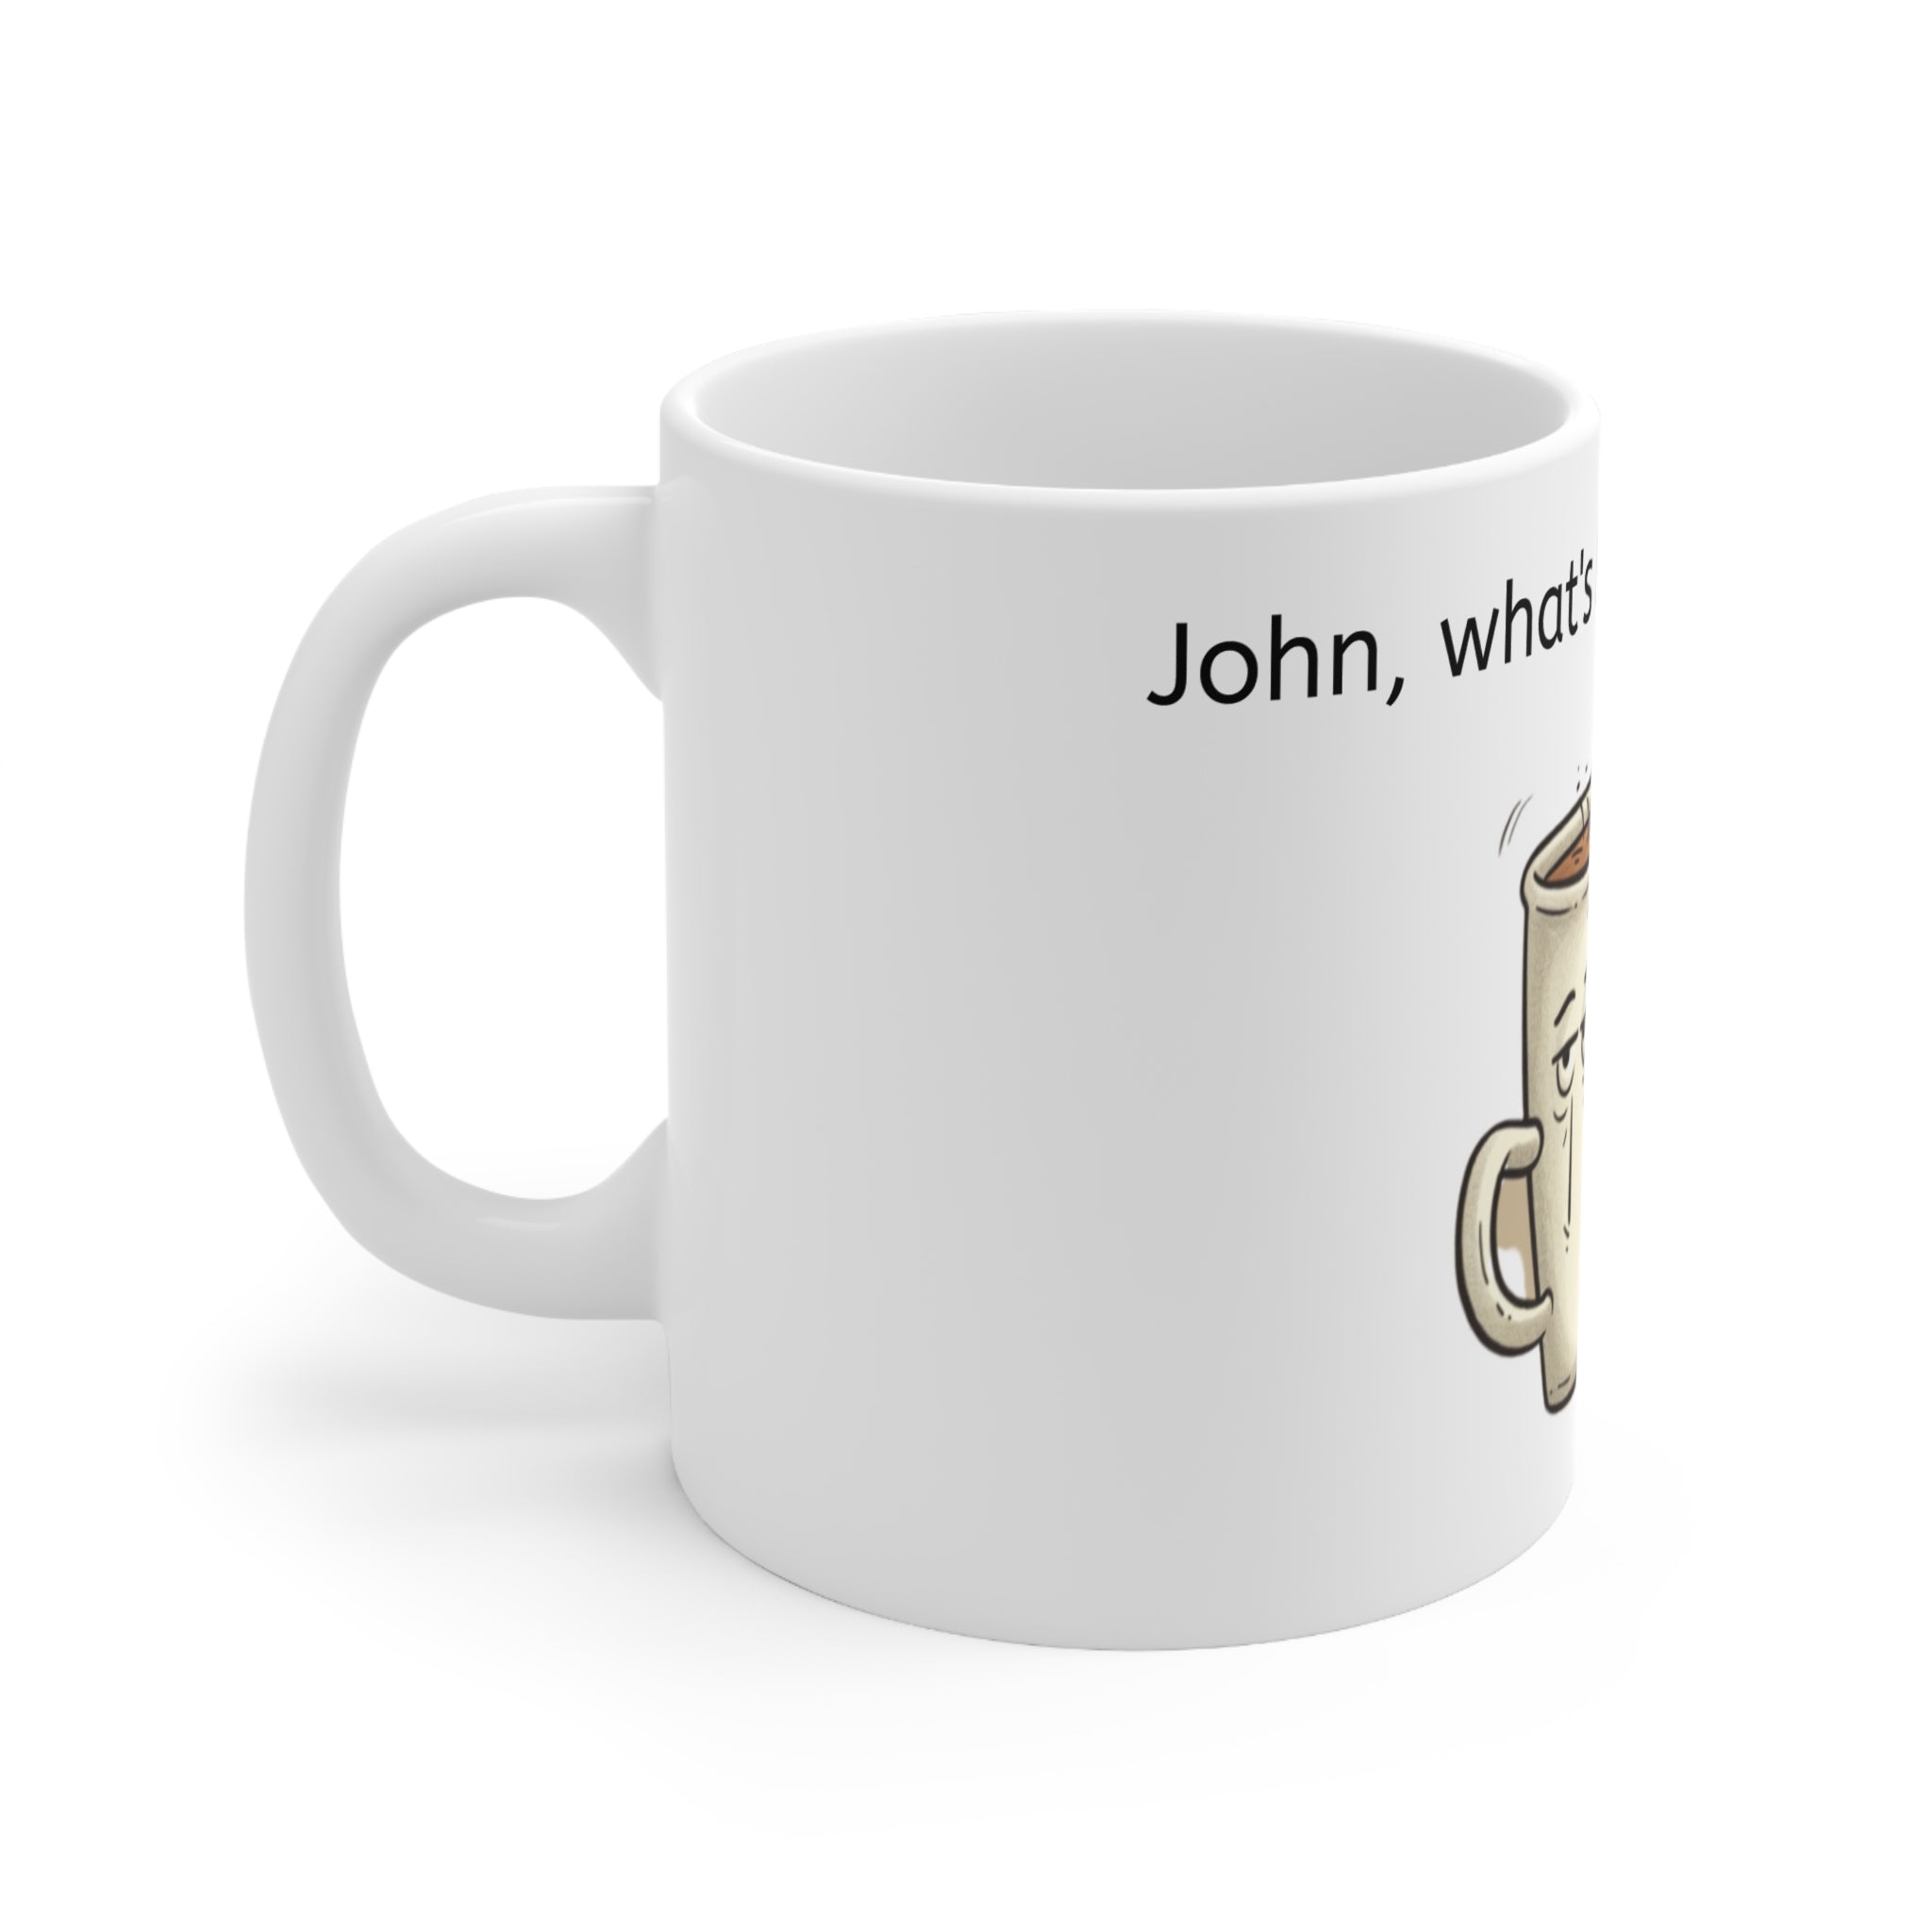 John's Ceramic Mug 11oz-- "John What's his name's" Ceramic mug, Coffee mug, 11oz mug, Stylish design, Coffee, Office Gift